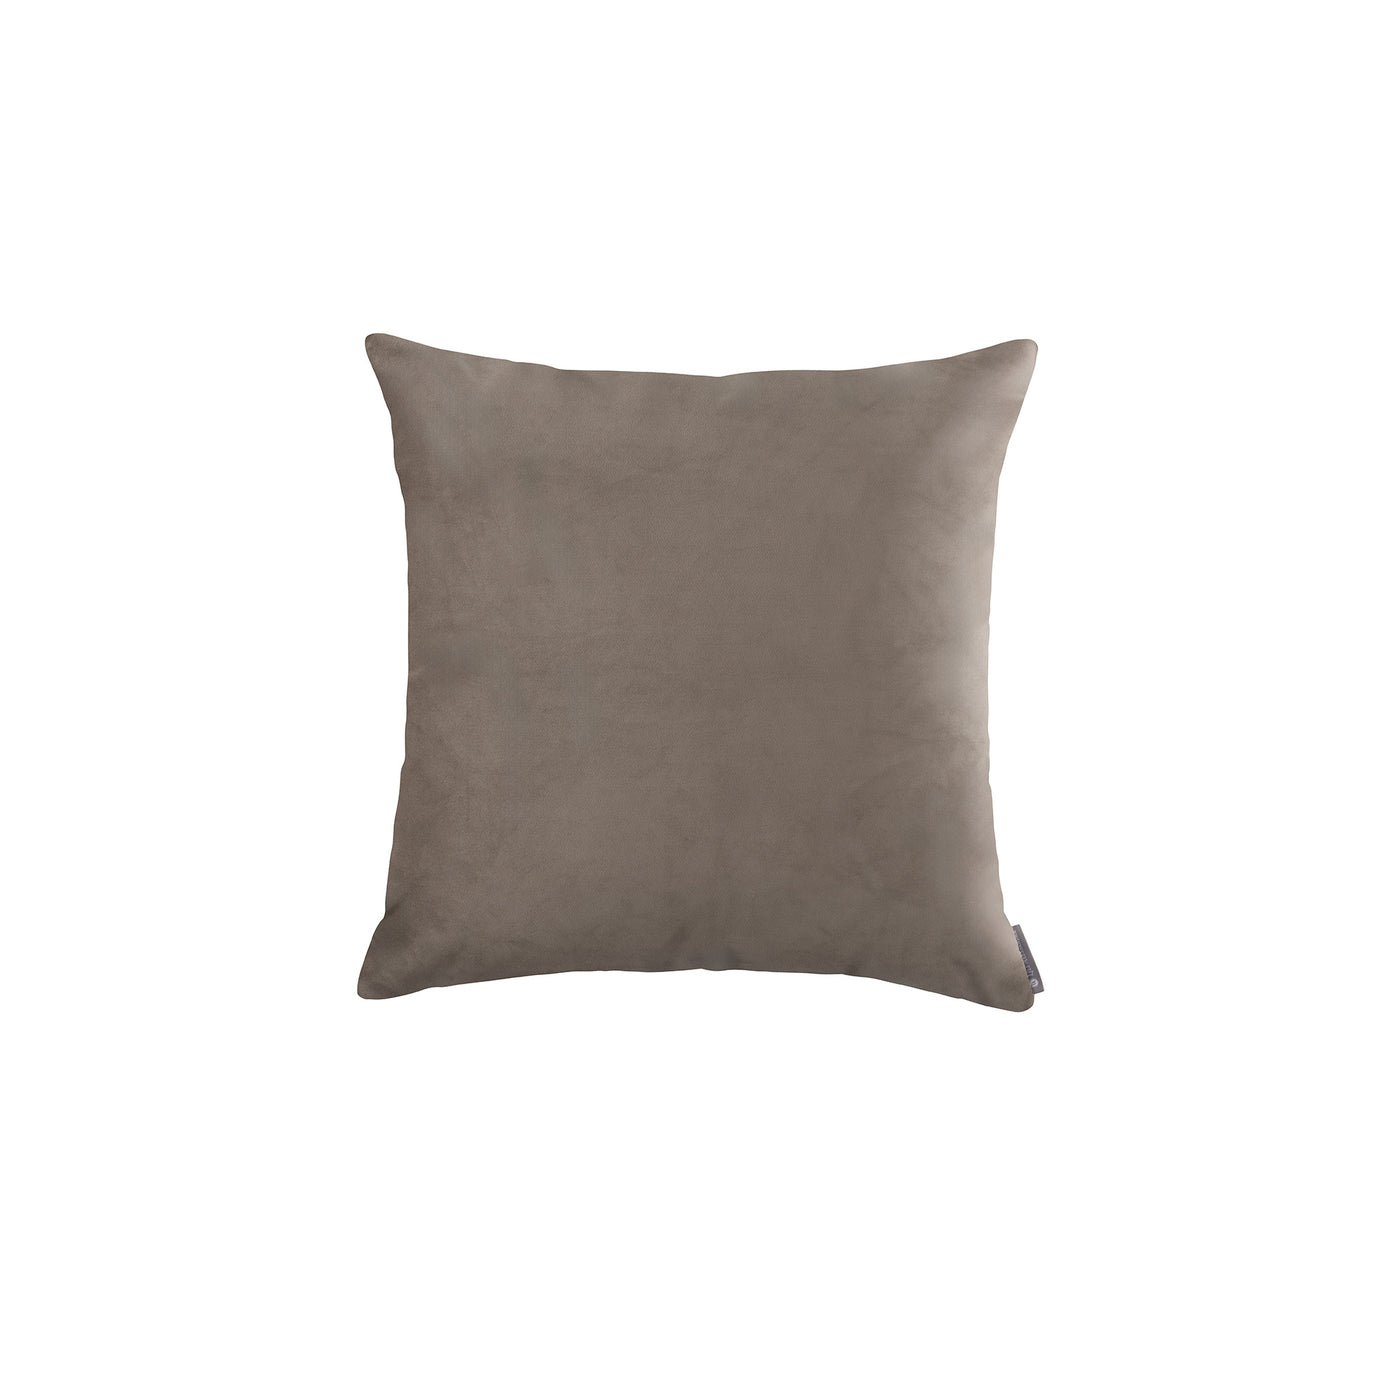 Vivid Ecru European Pillow (26x26)